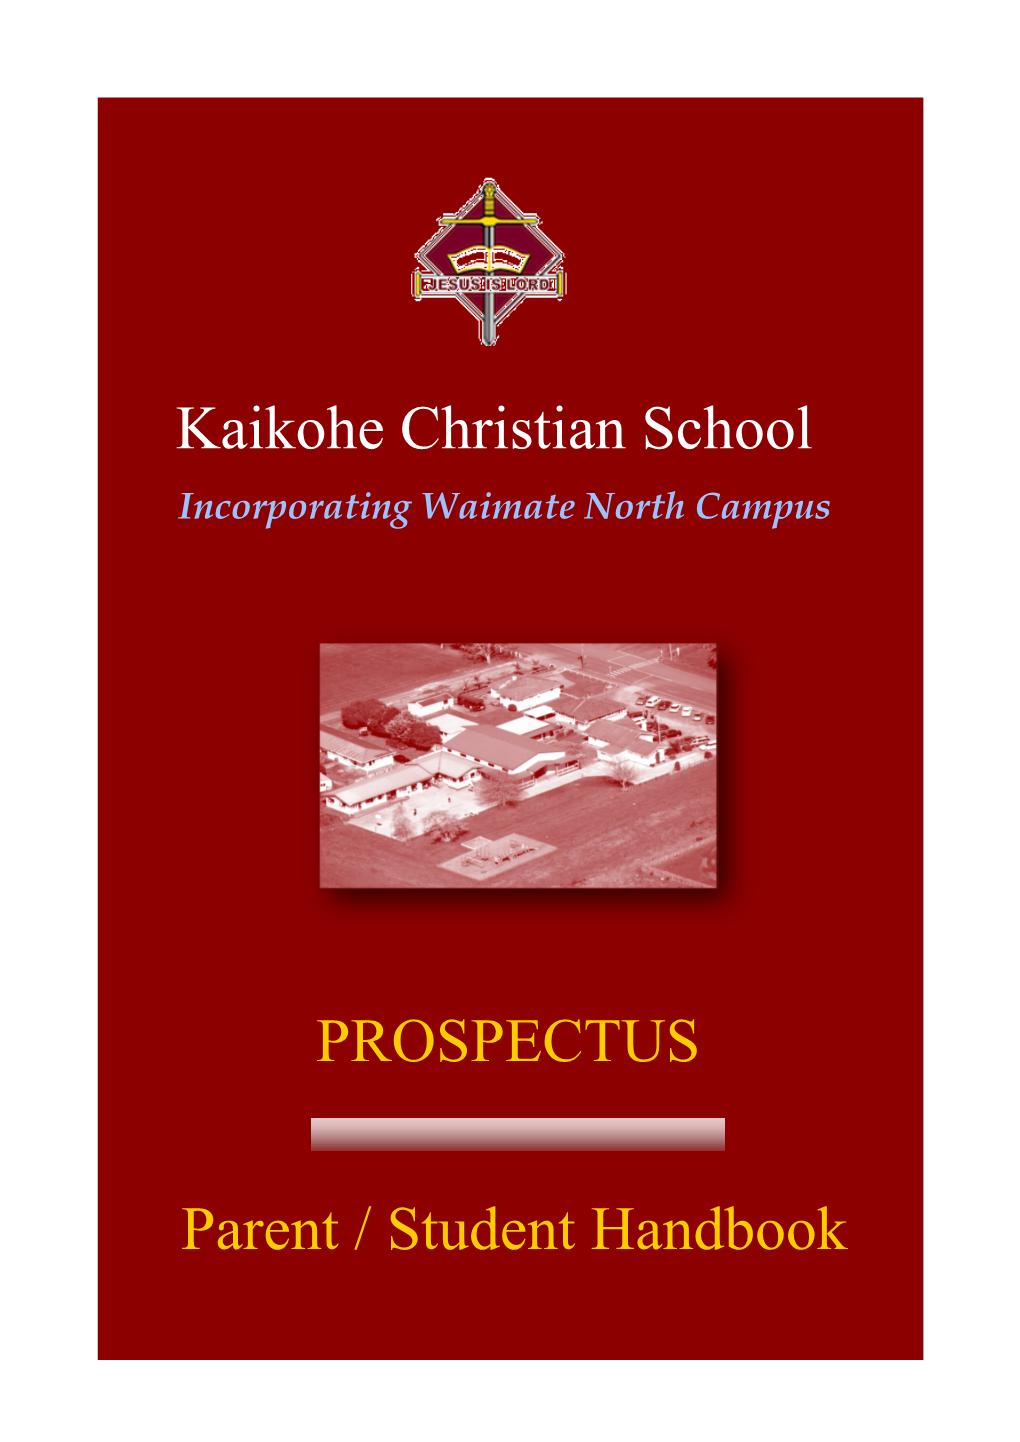 Kaikohe Christian School PROSPECTUS Parent / Student